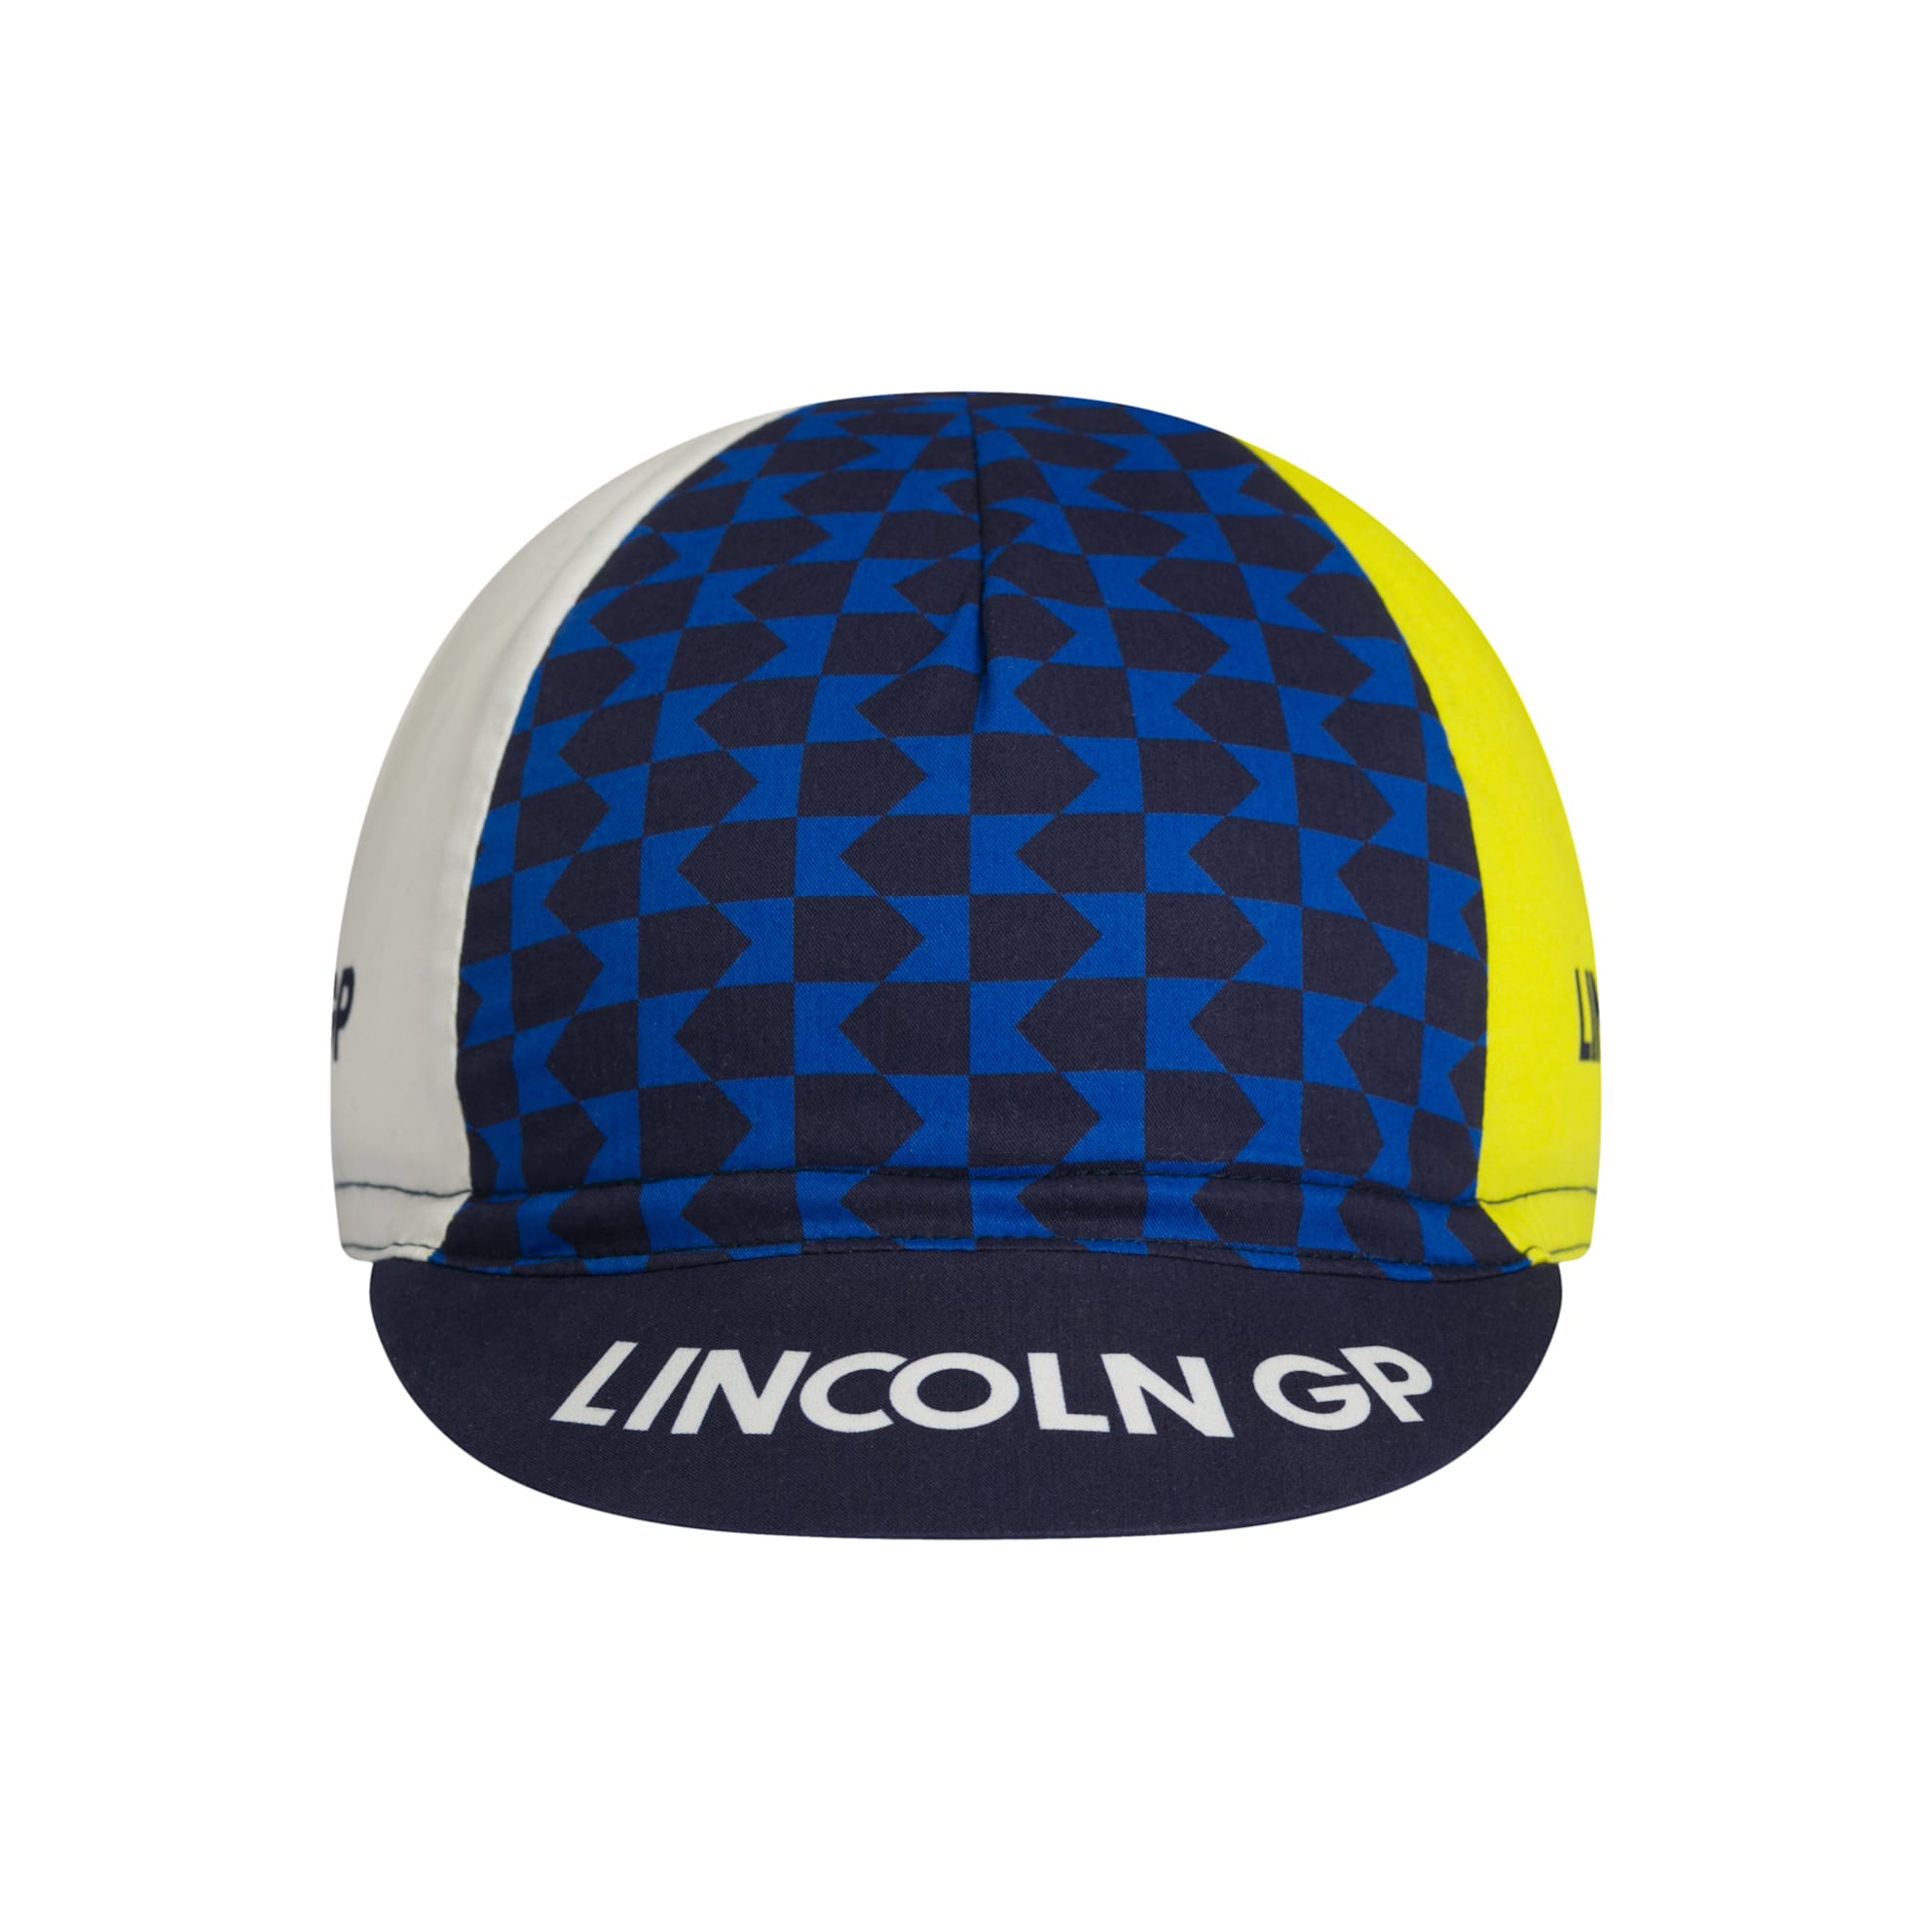 Rapha Lincoln GP Cap